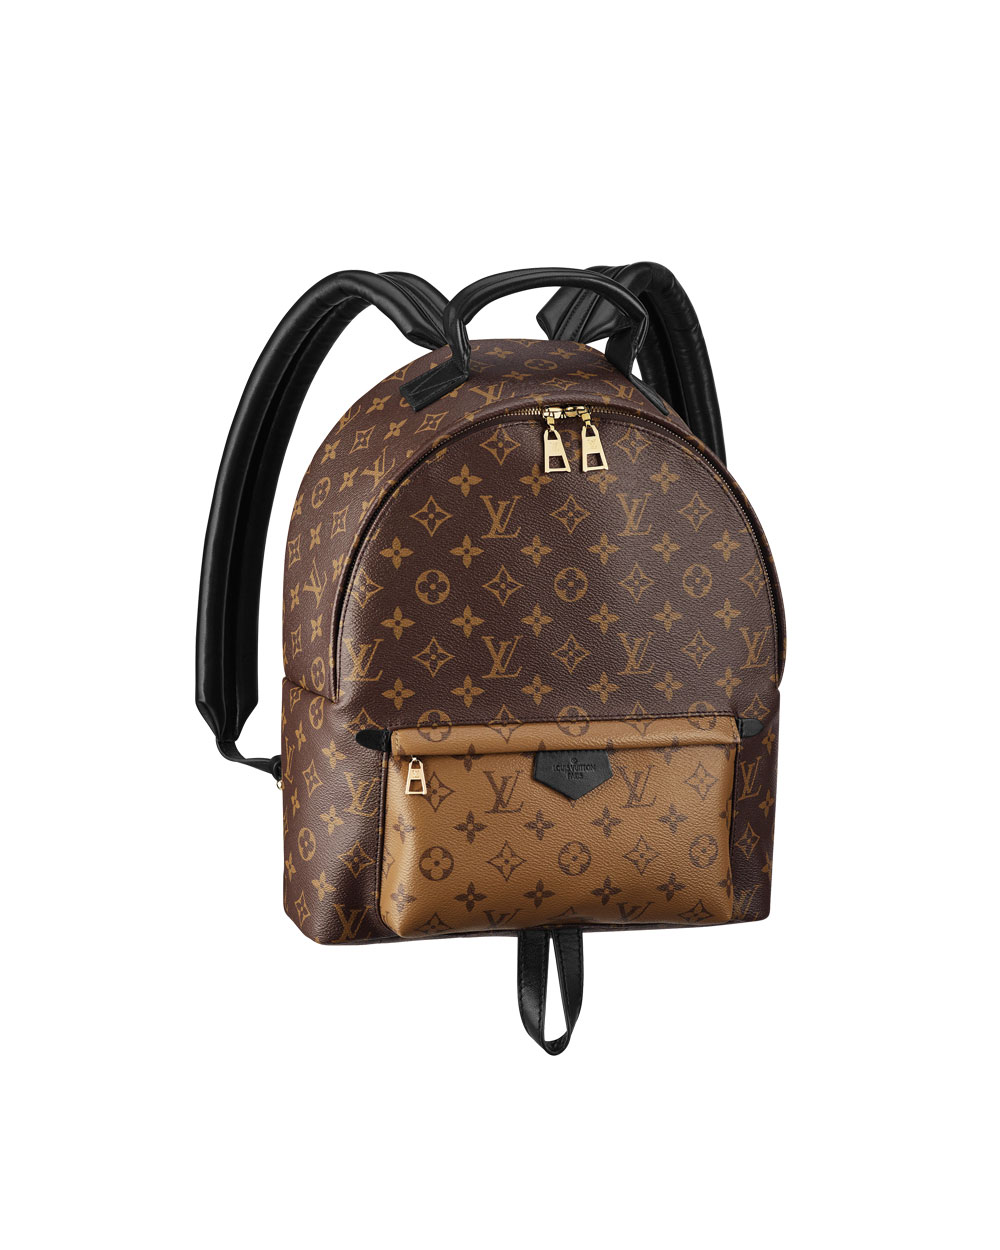 Louis Vuitton backpack, $3050